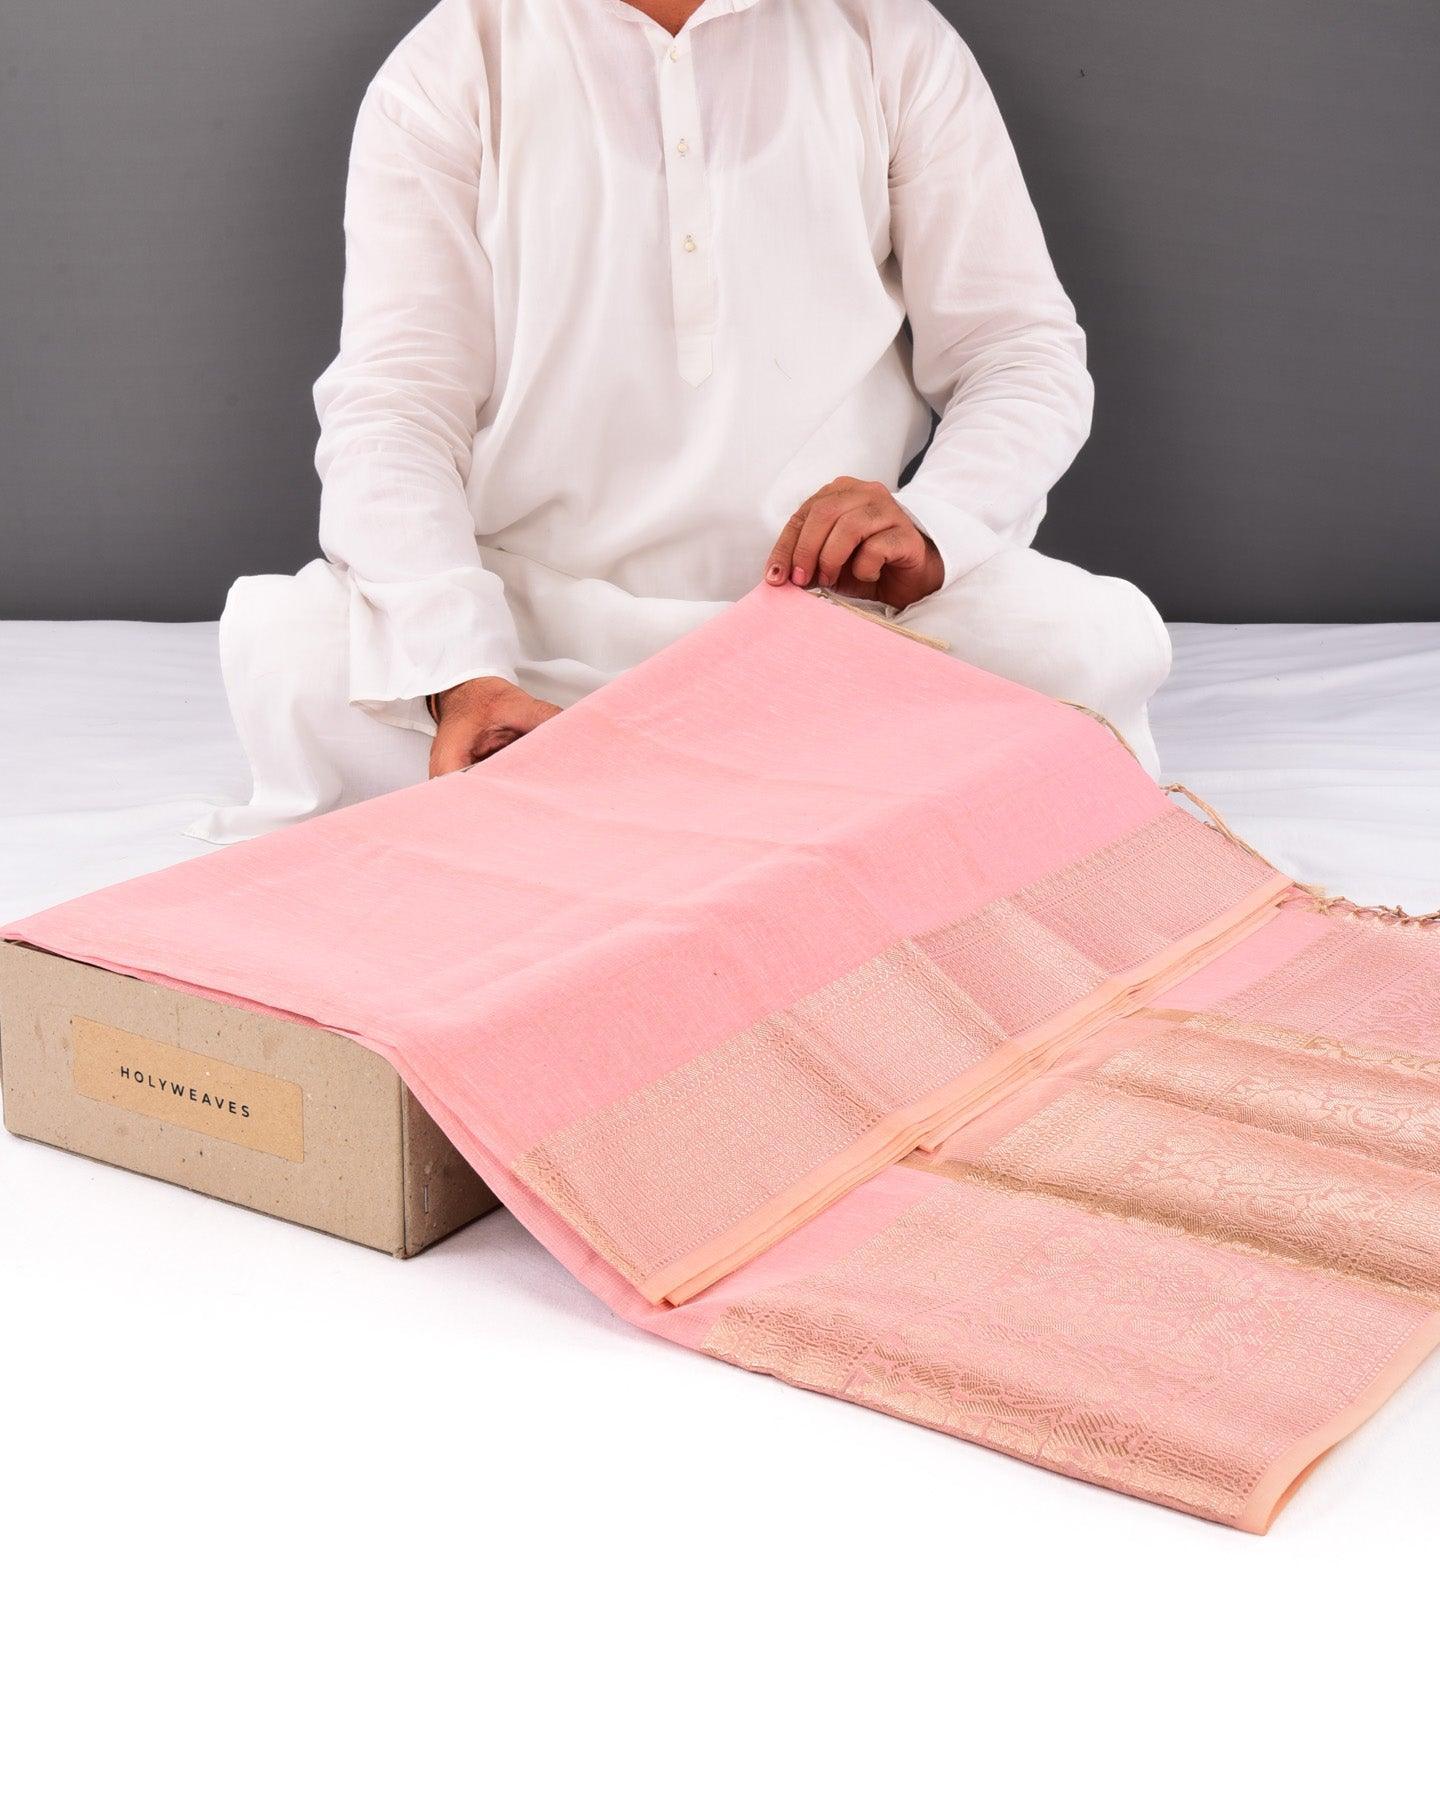 Metallic Pink Banarasi Zari Pin Stripes Brocade Woven Art Cotton Tissue Saree with Zari Border - By HolyWeaves, Benares